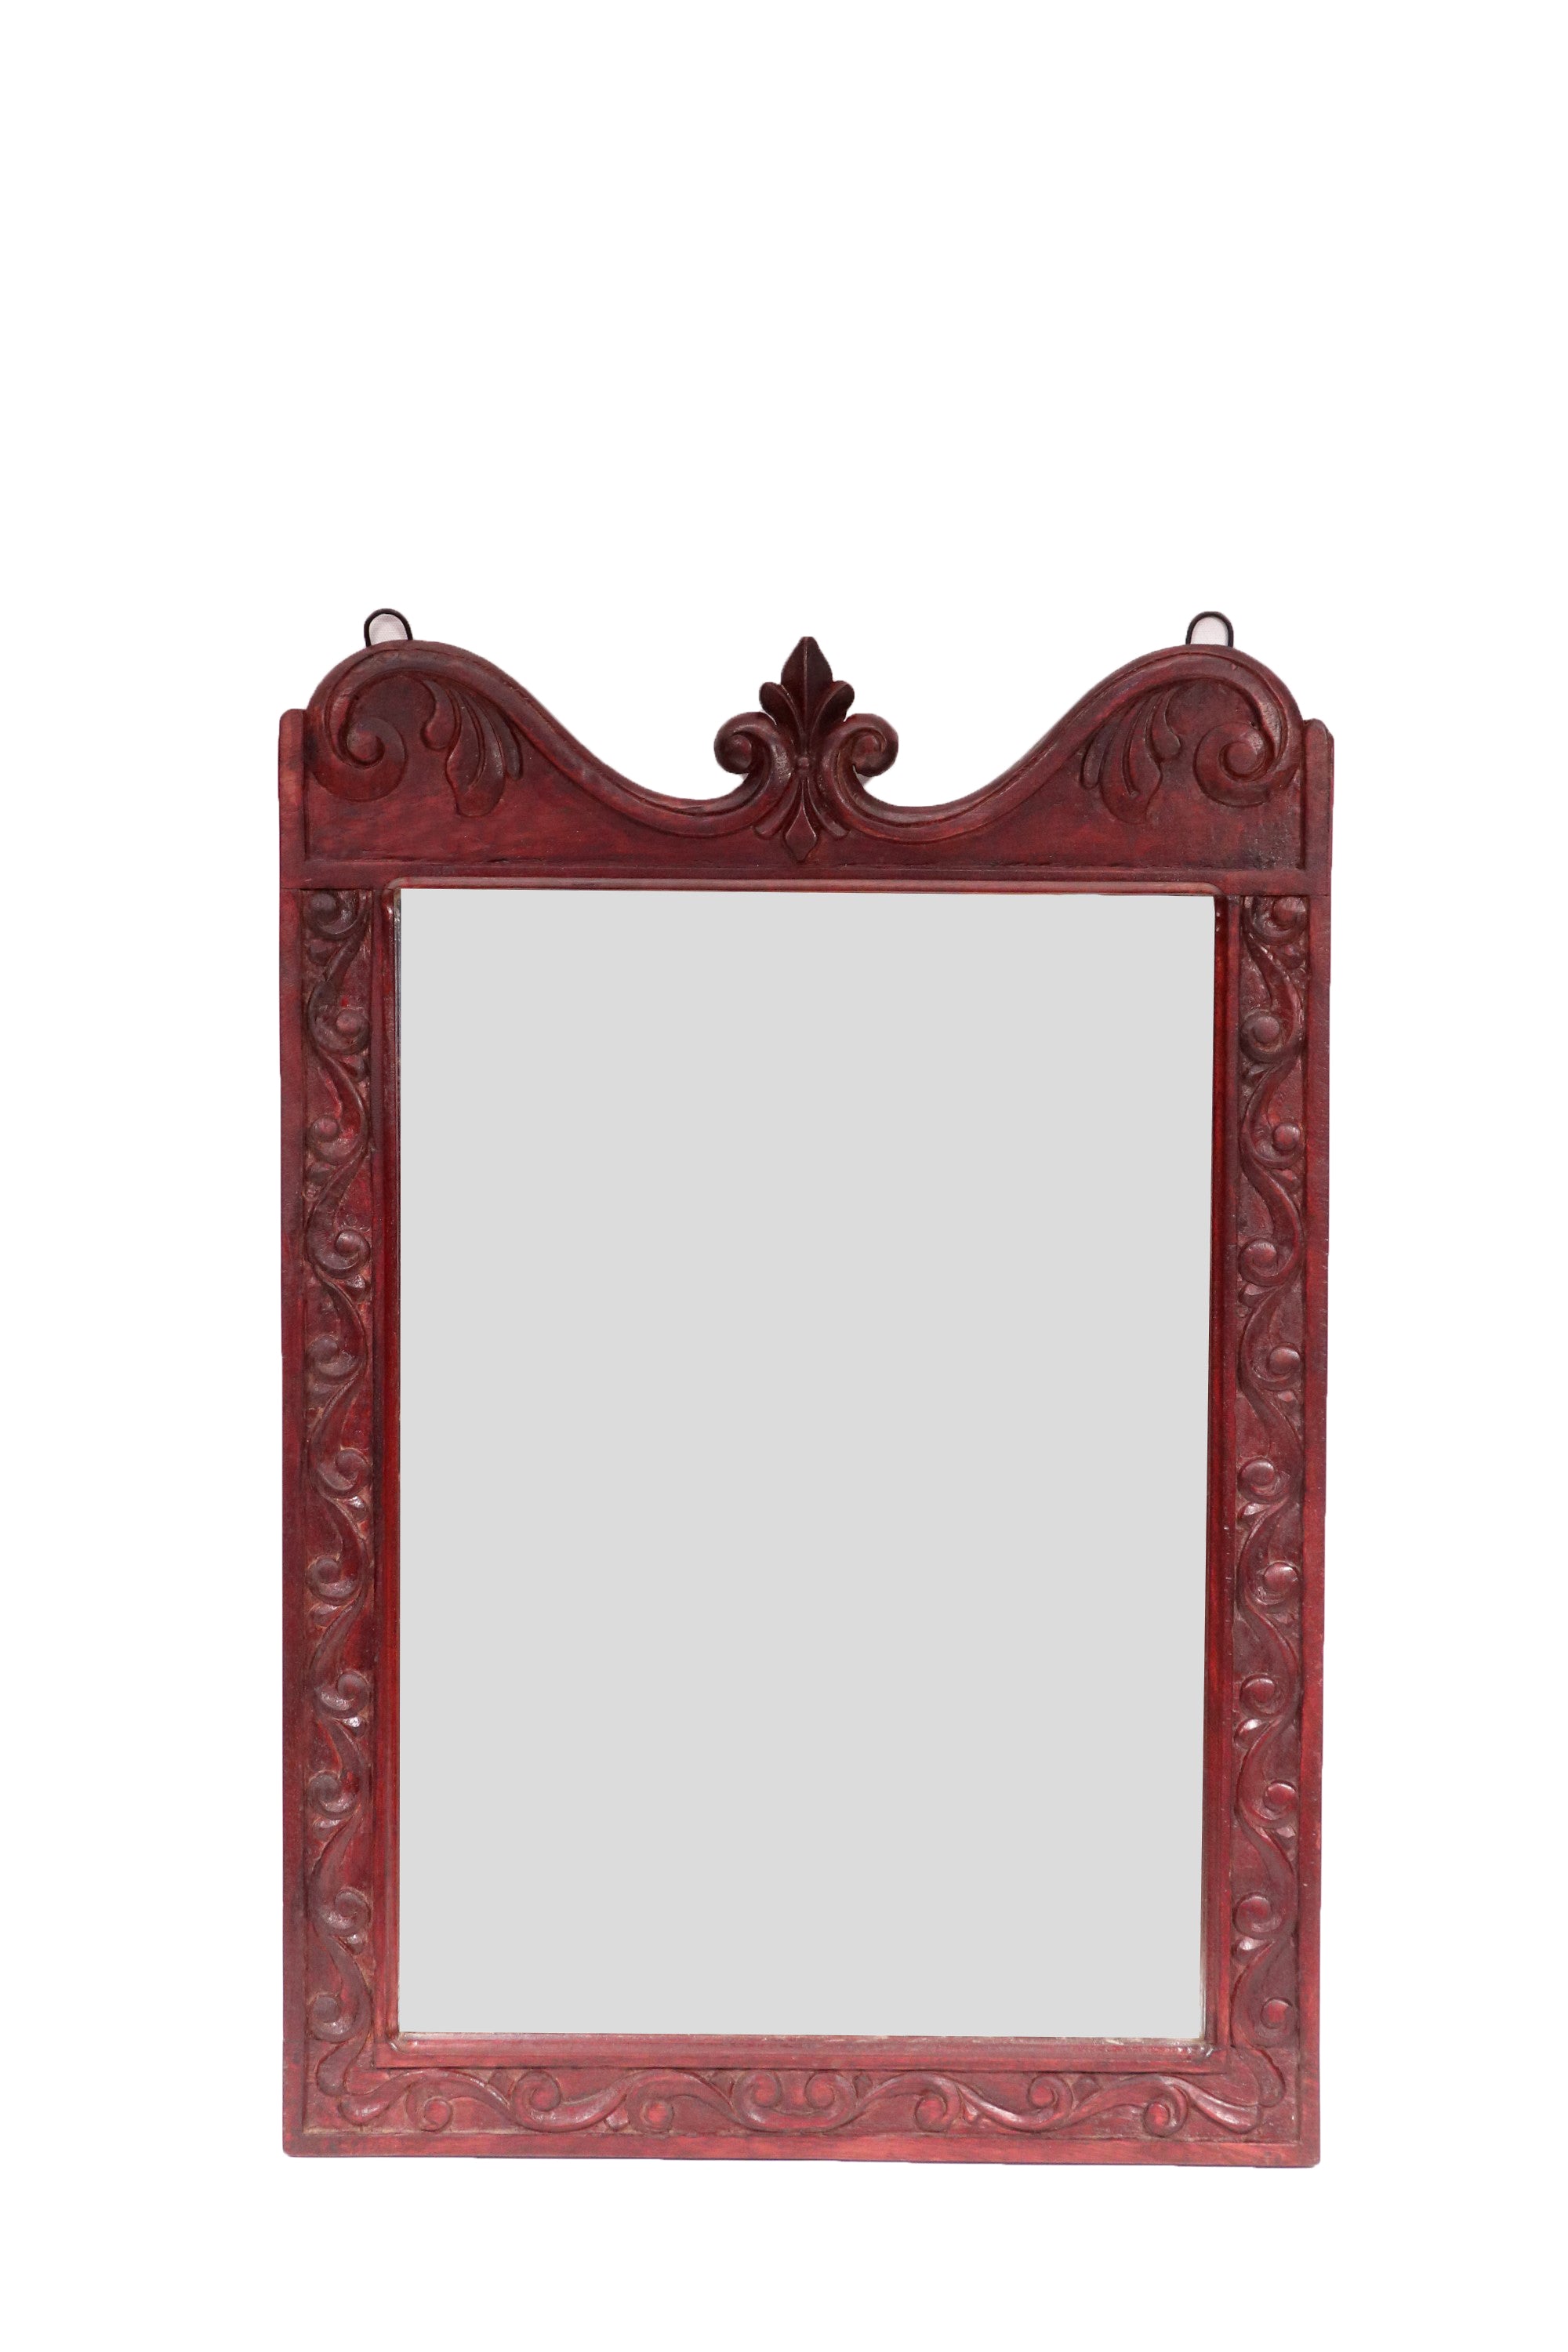 Royal court house wooden mirror Mirror